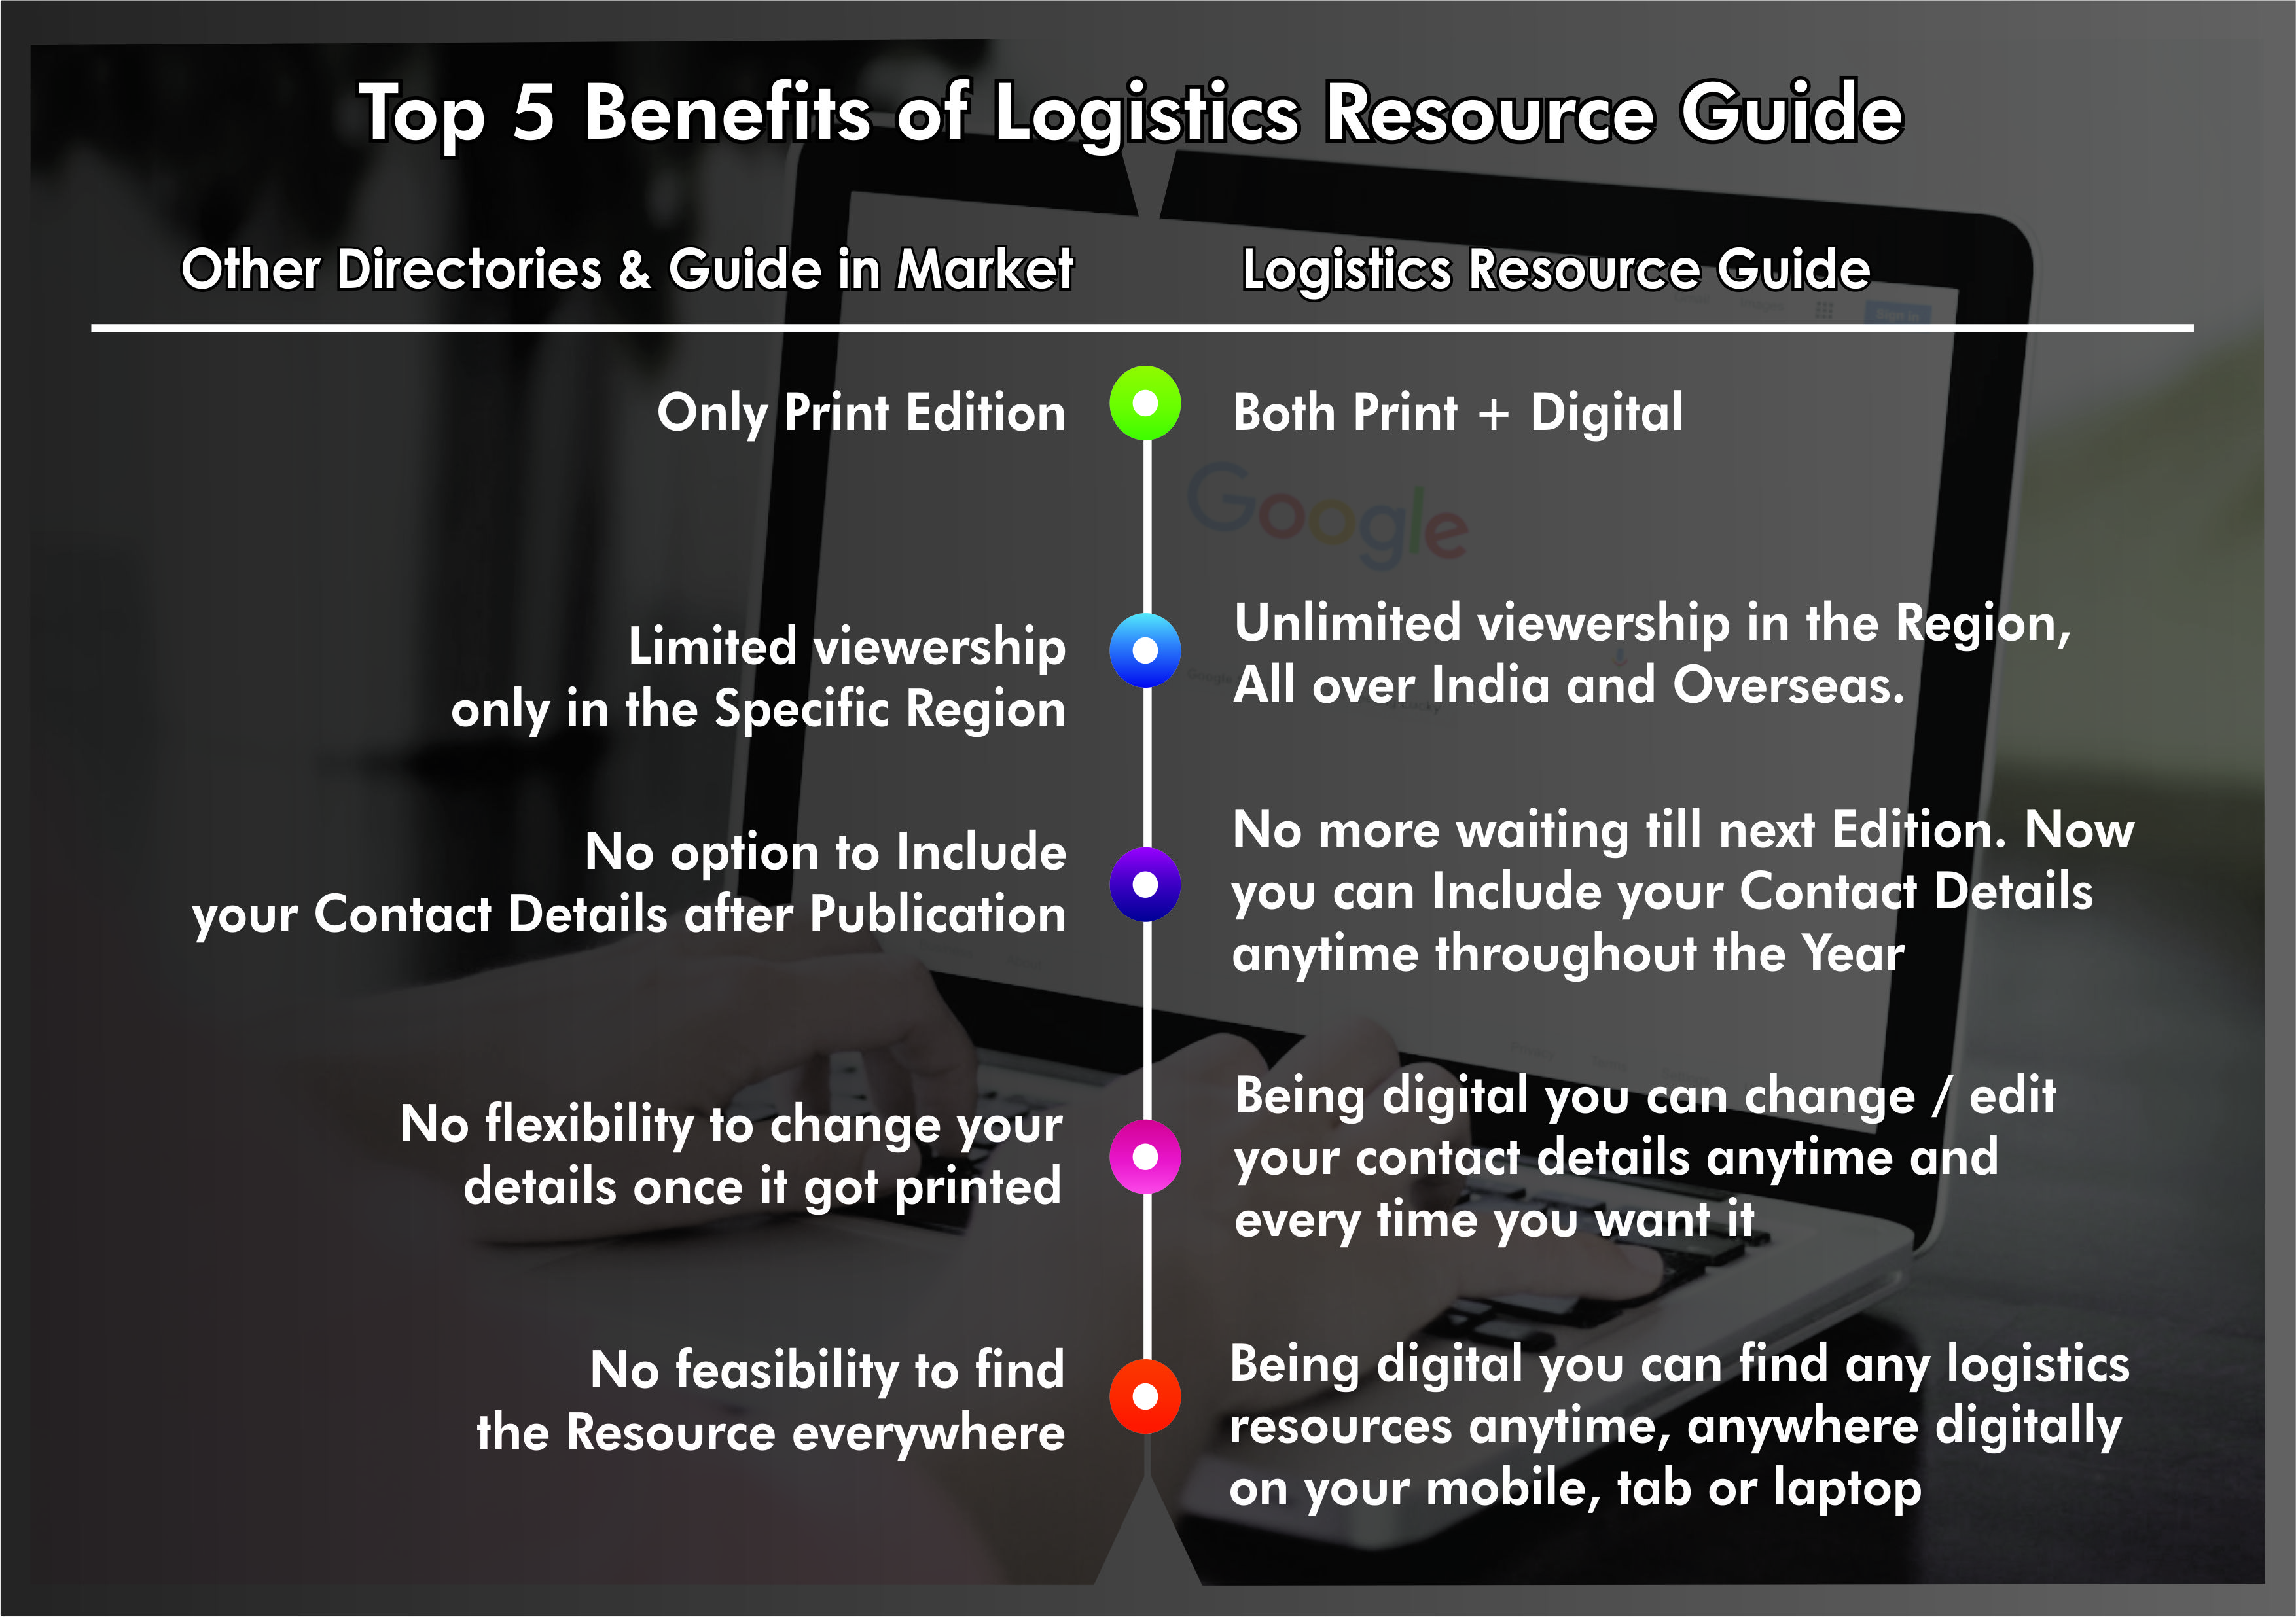 Top 5 Benefits of Logistics Resource Guide